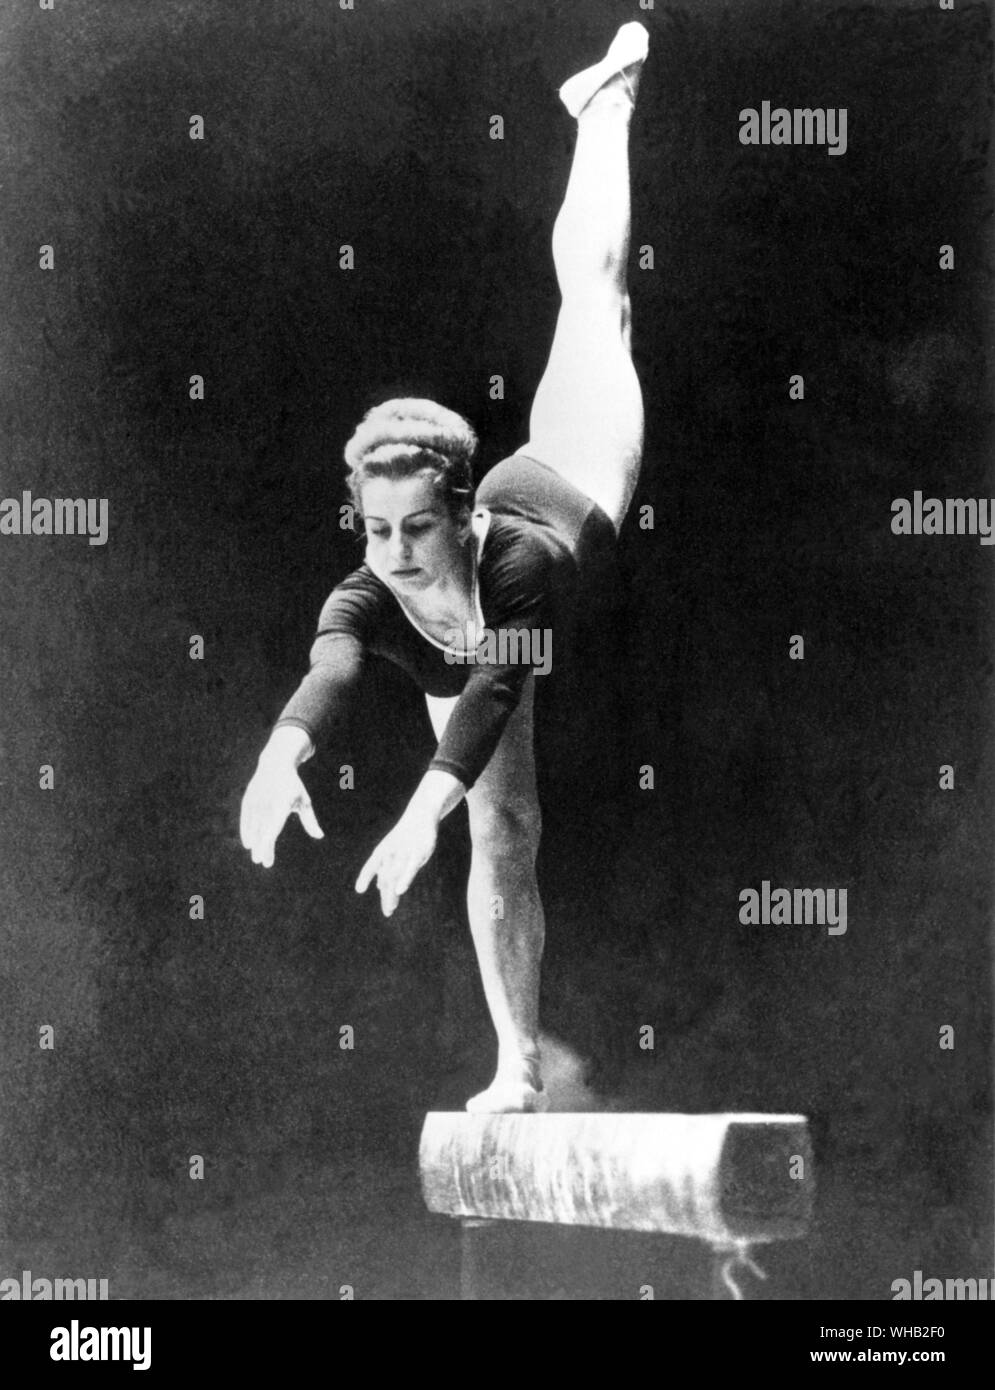 Japan, Tokyo Olympics, 1964: Vera Caslavska (Czechoslovakia) in the women's gymnastics. . . Stock Photo